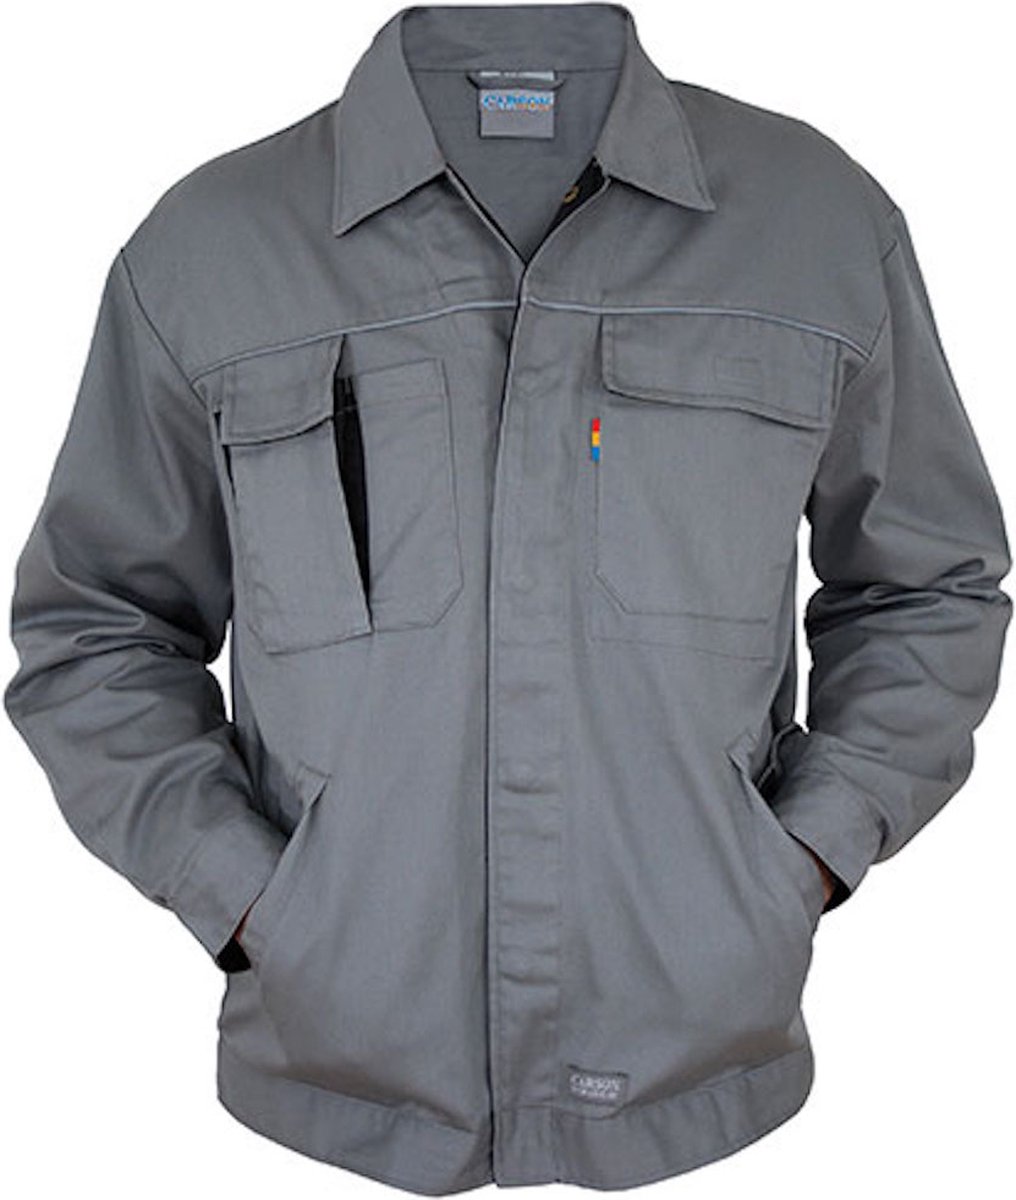 Carson Workwear 'Contrast' Jacket Werkjas Grey - 64